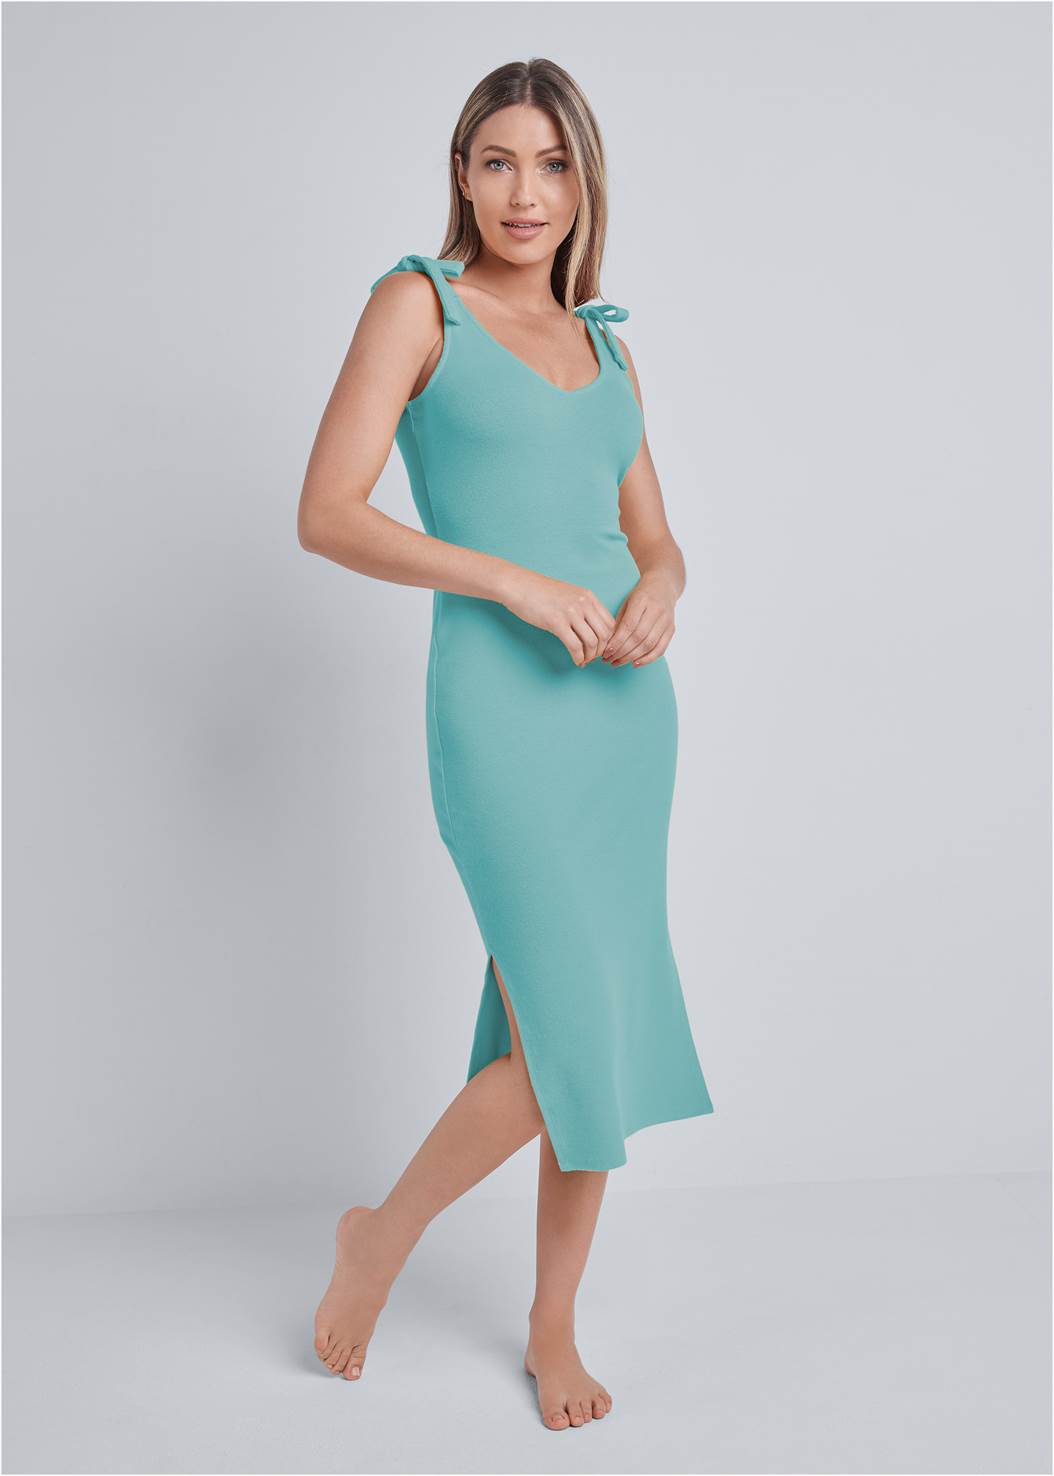 Shoulder Tie Lounge Dress in Turquoise | VENUS